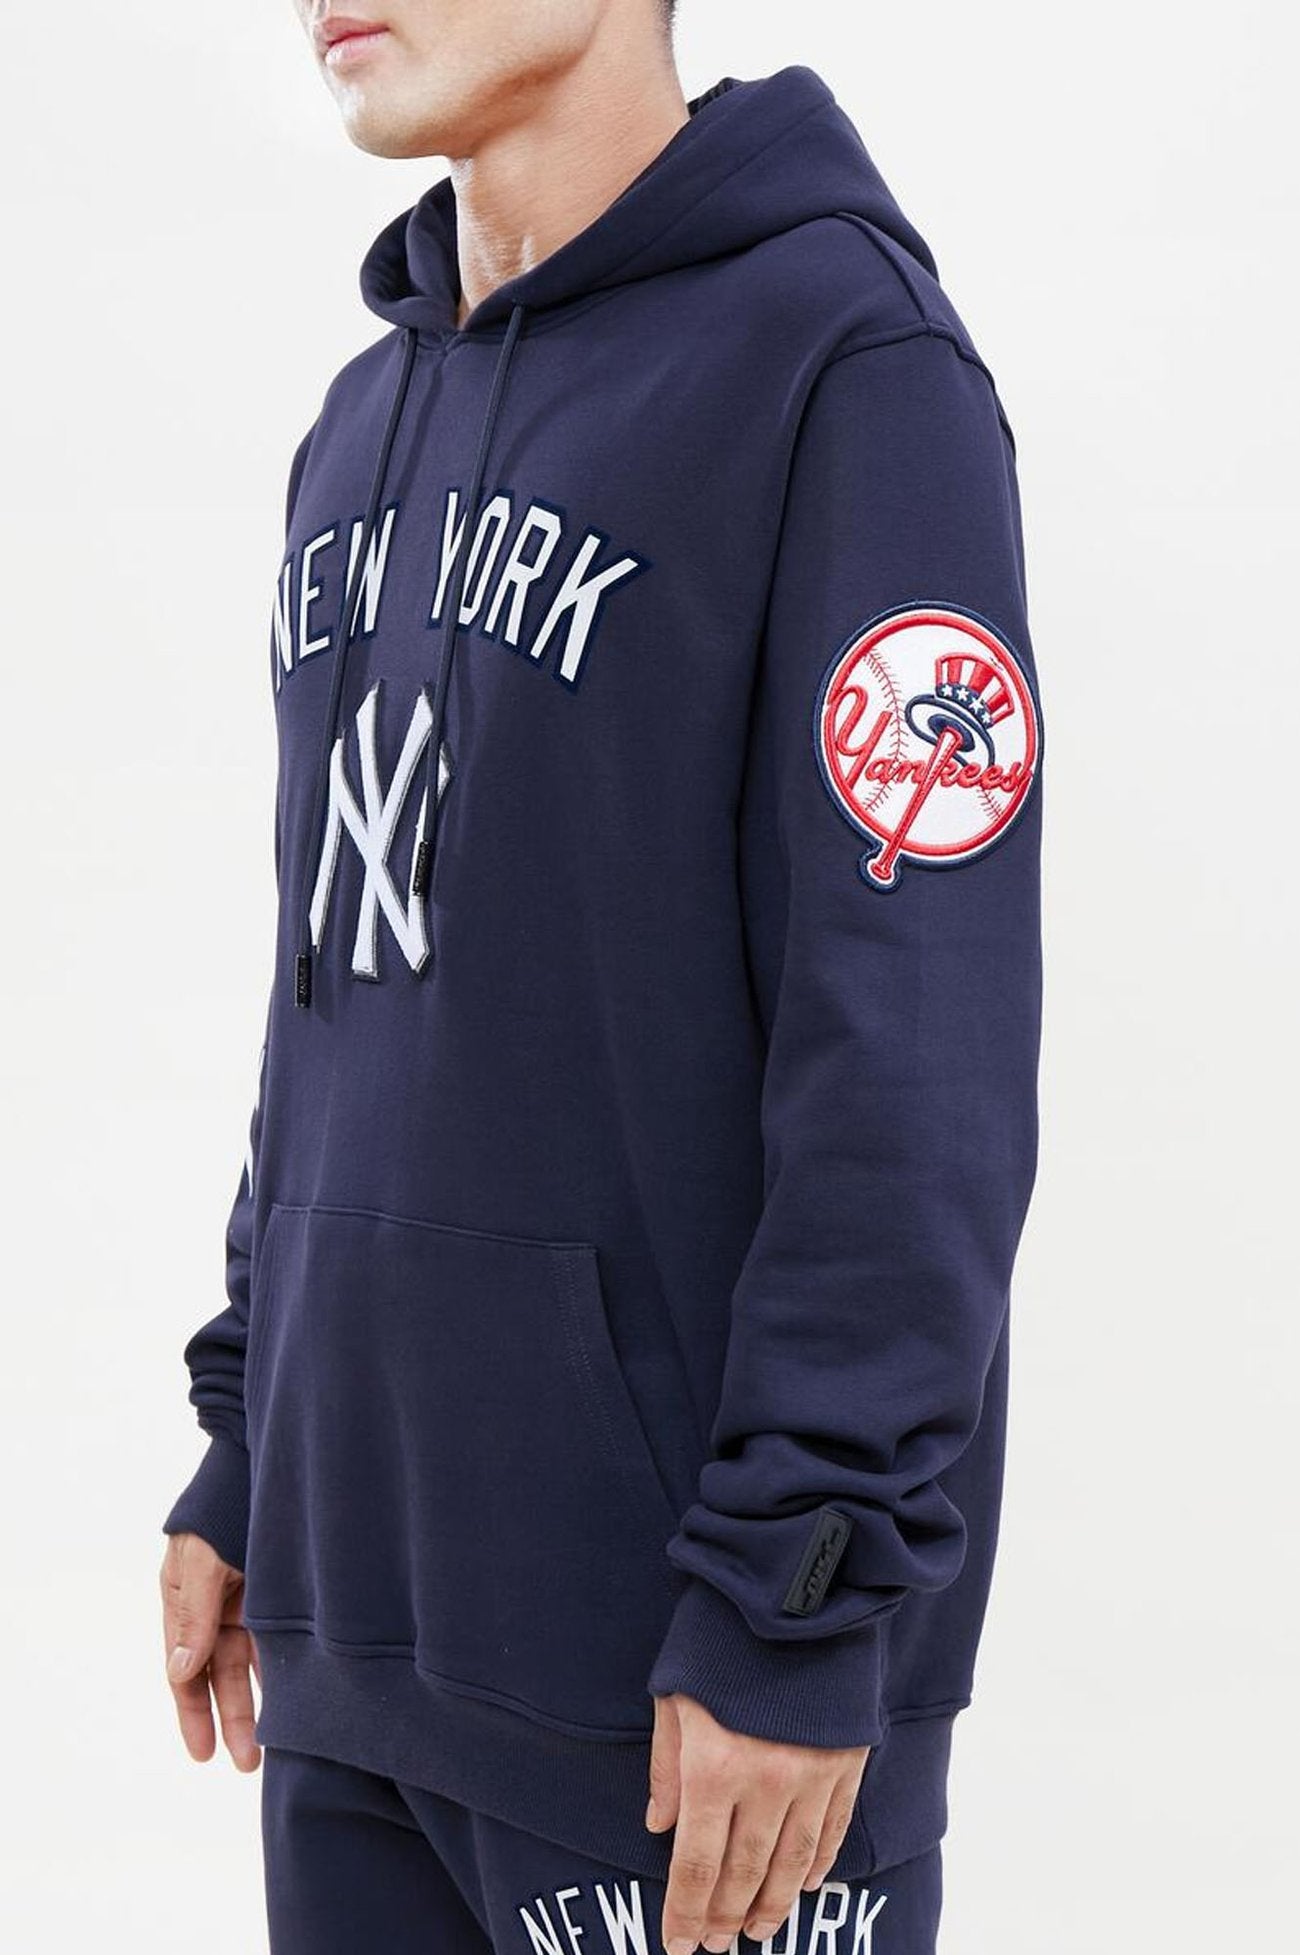 Men's New York Yankees Pro Standard Navy Stacked Logo Pullover Sweatshirt